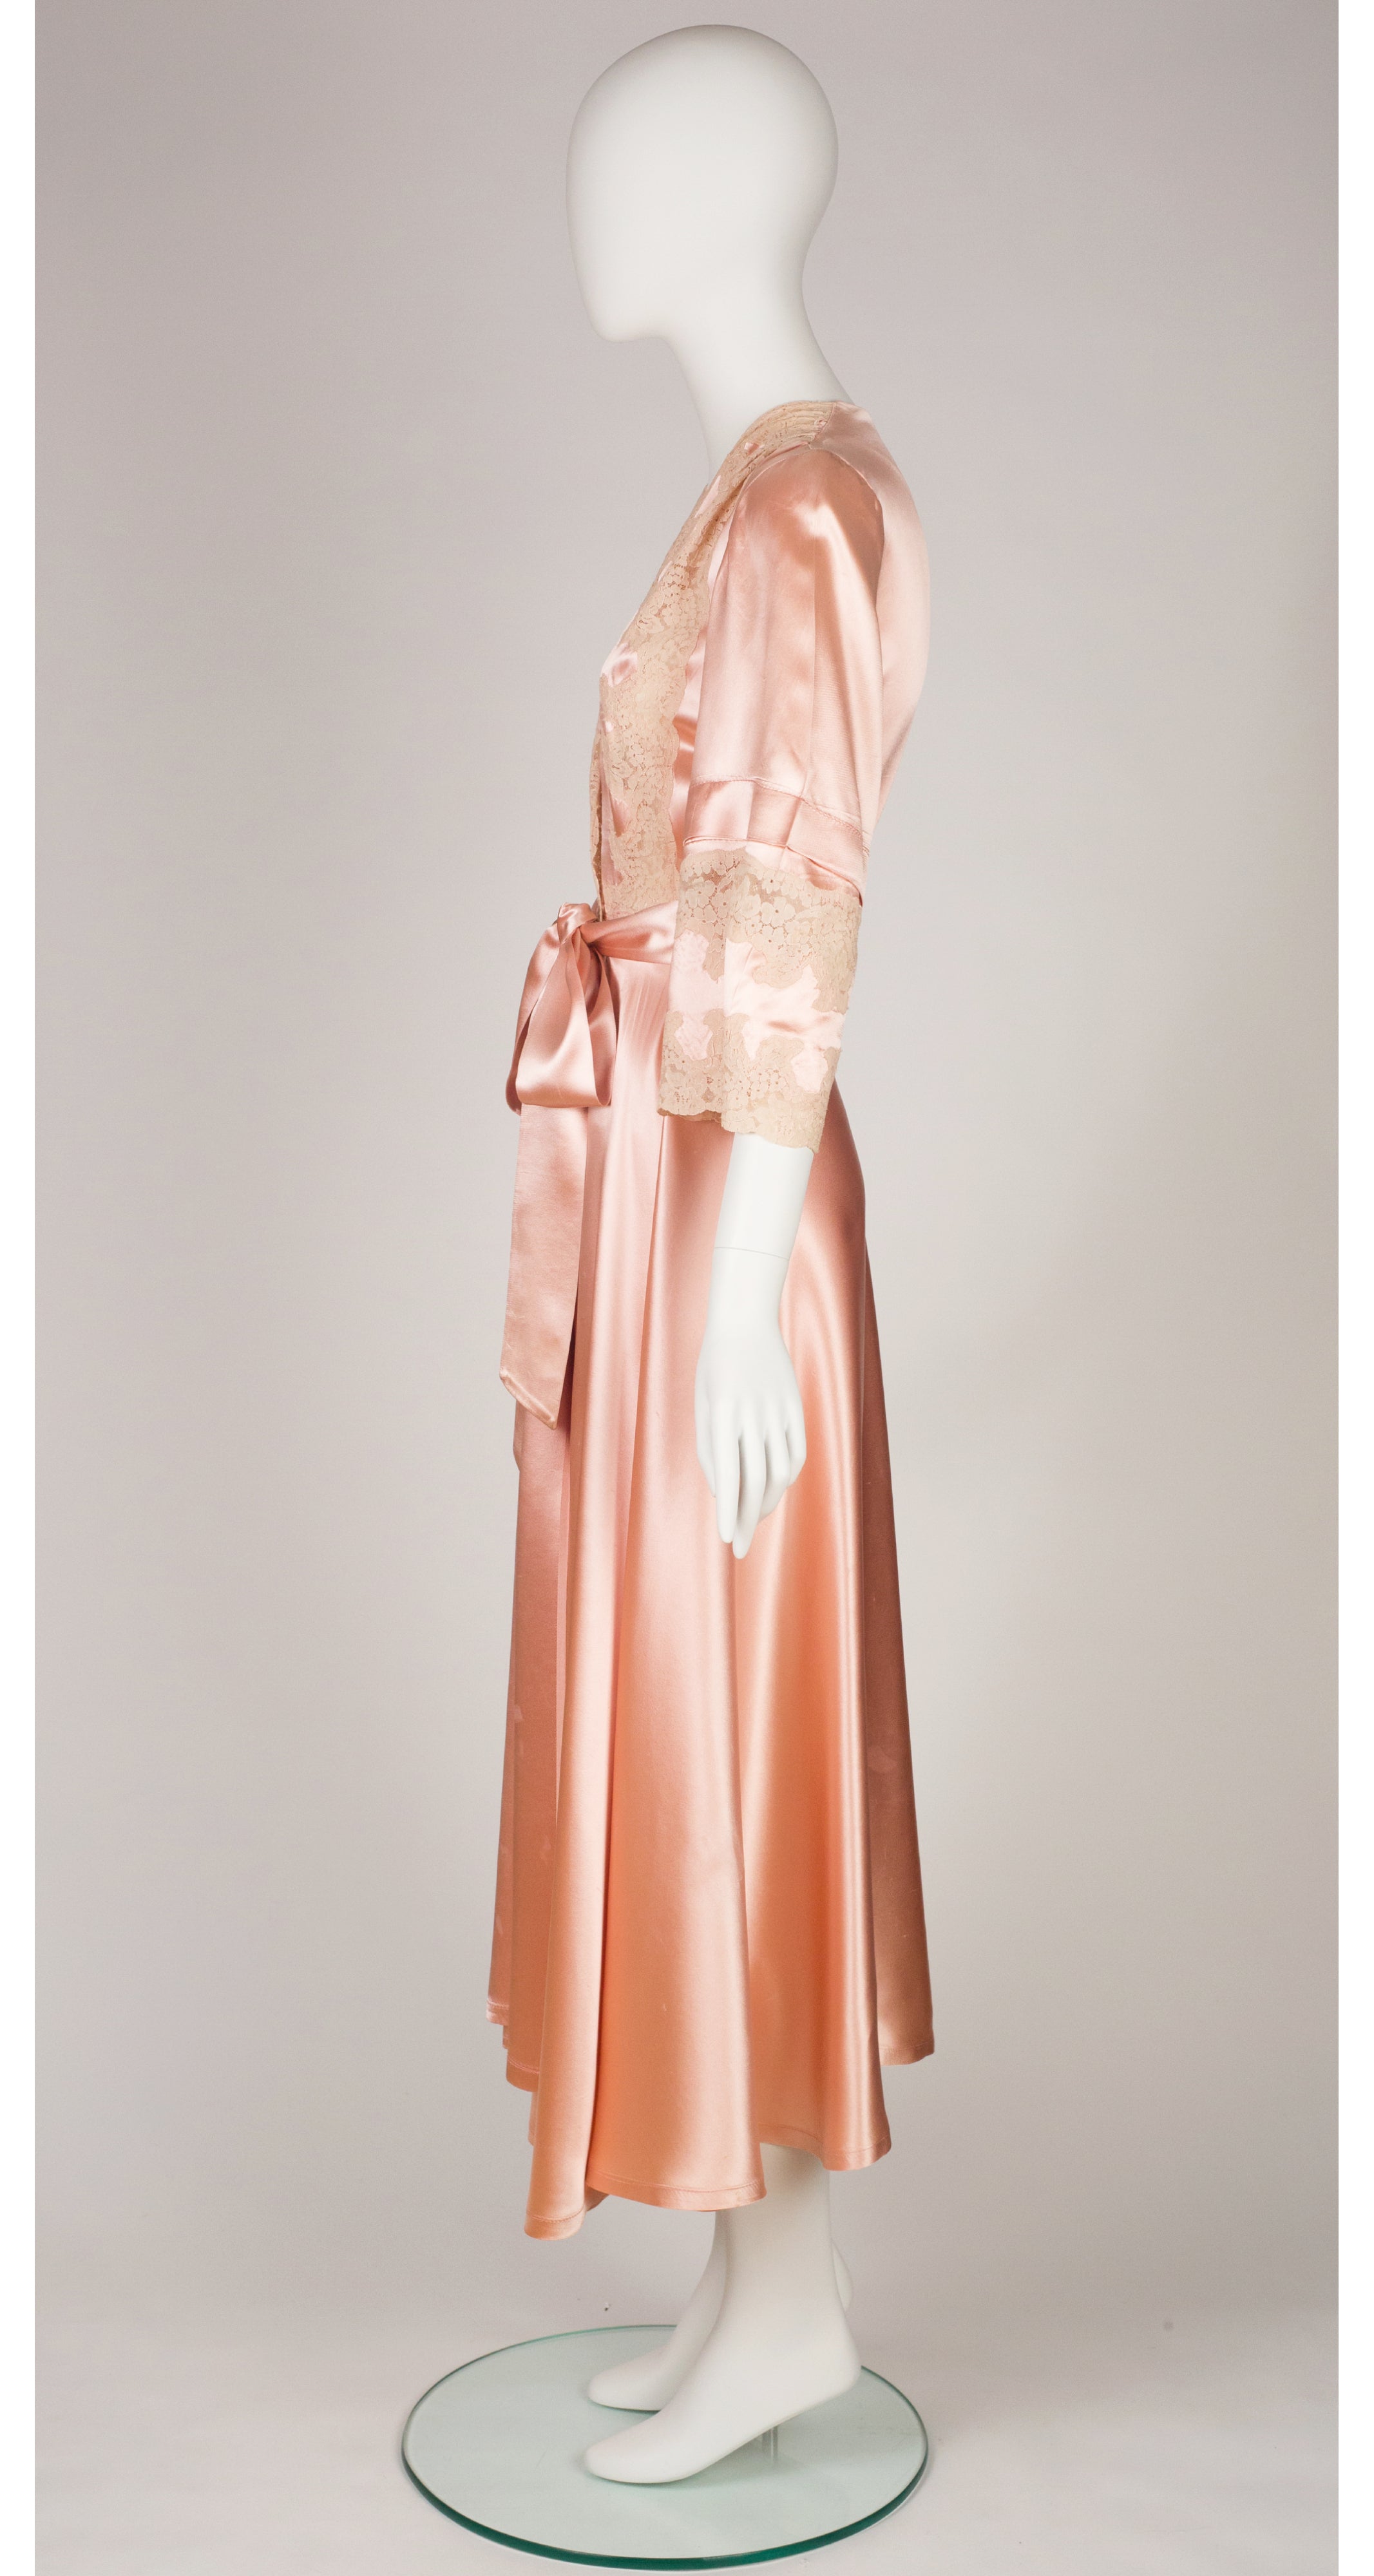 1940s Lace Trim Pink Liquid Satin Dressing Gown